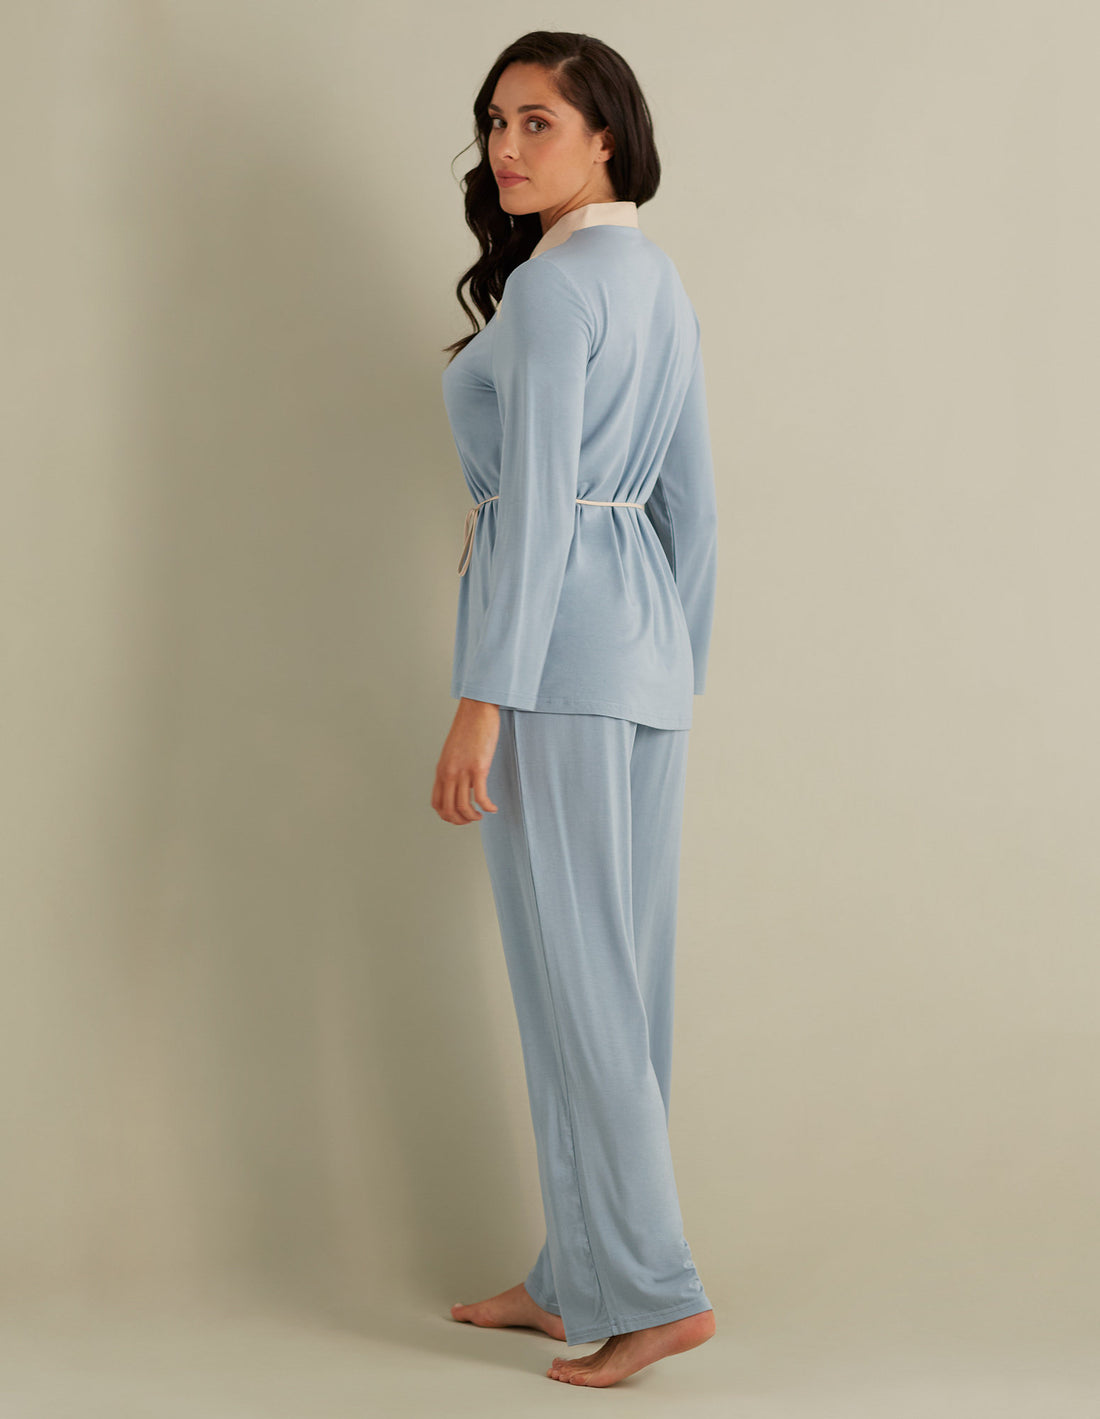 Magnolia Night Shirt Pajama Set_PPRD163002_038_03